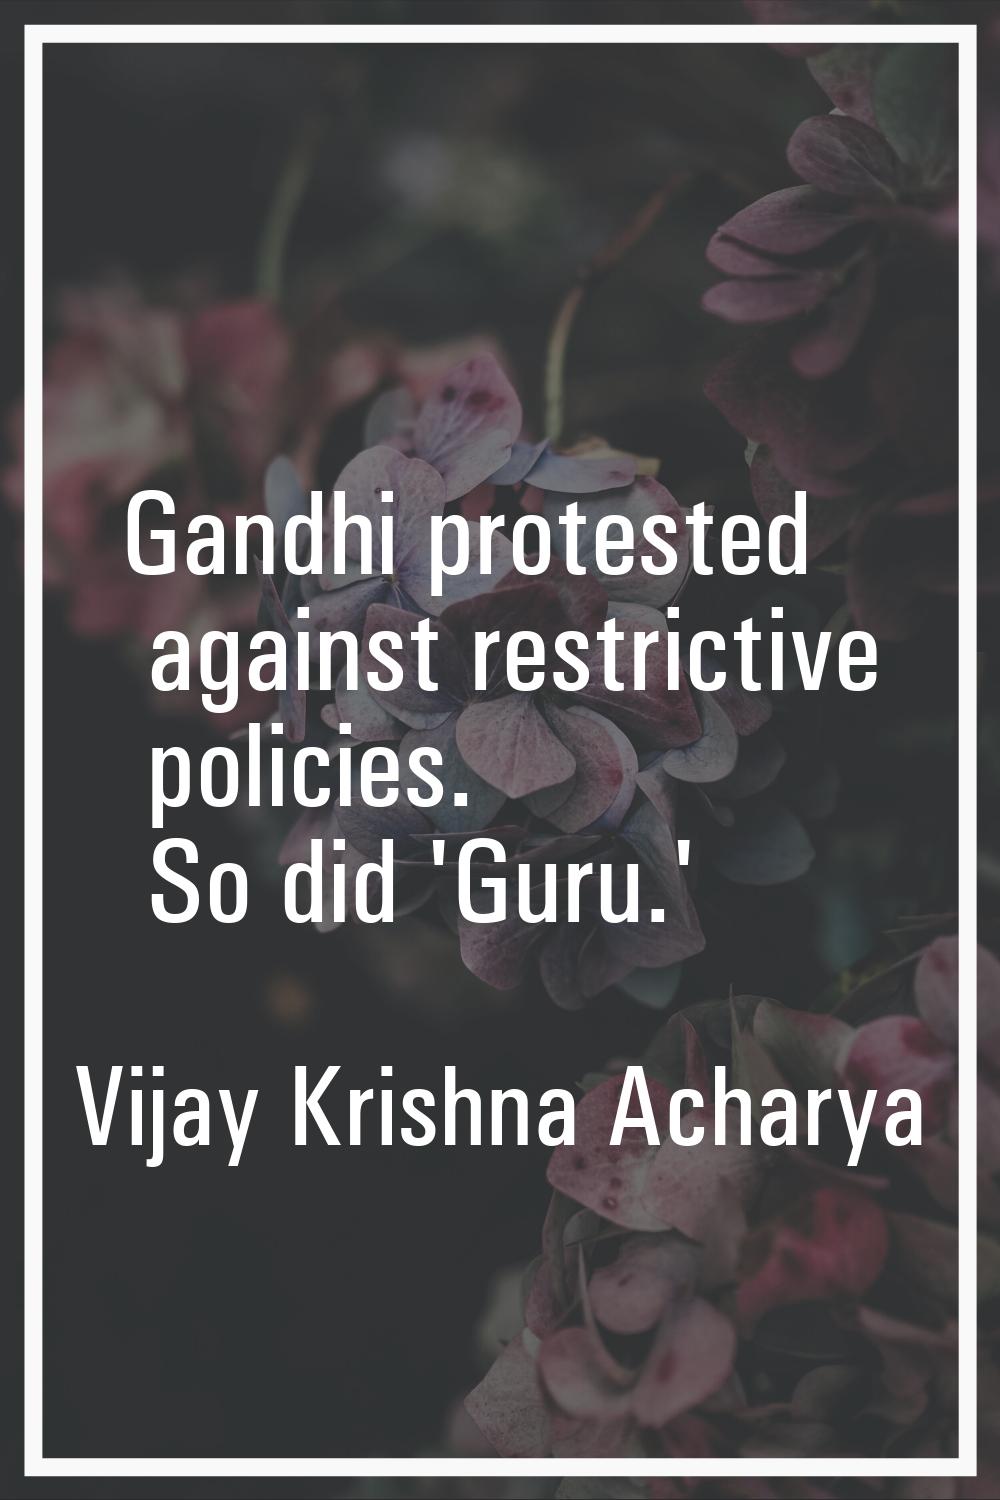 Gandhi protested against restrictive policies. So did 'Guru.'